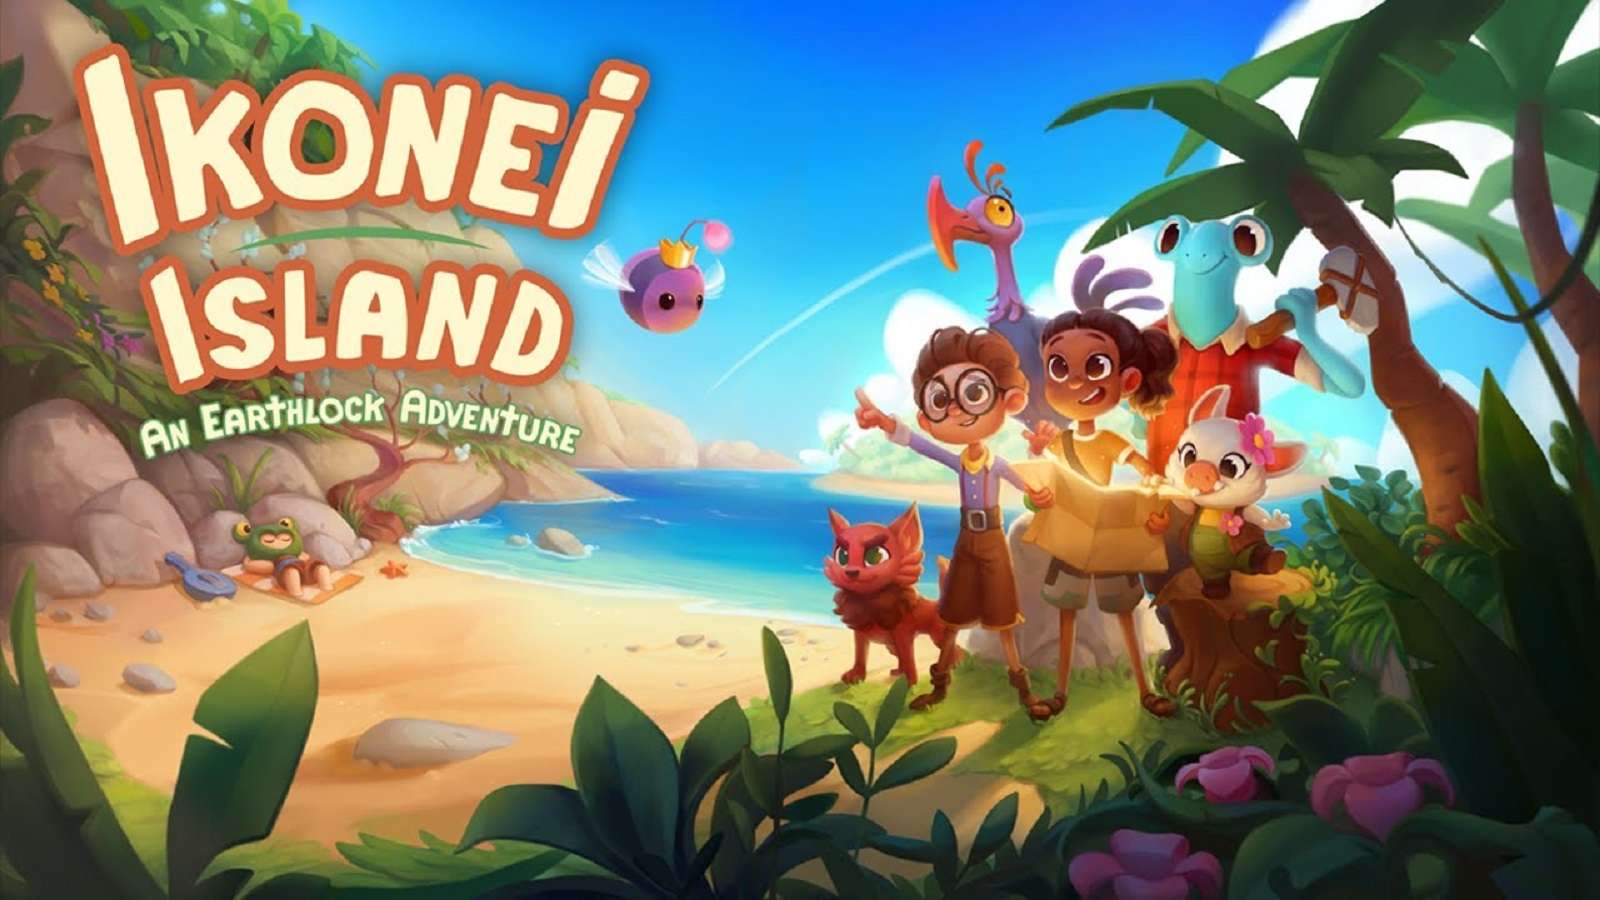 Ikonei Island Review